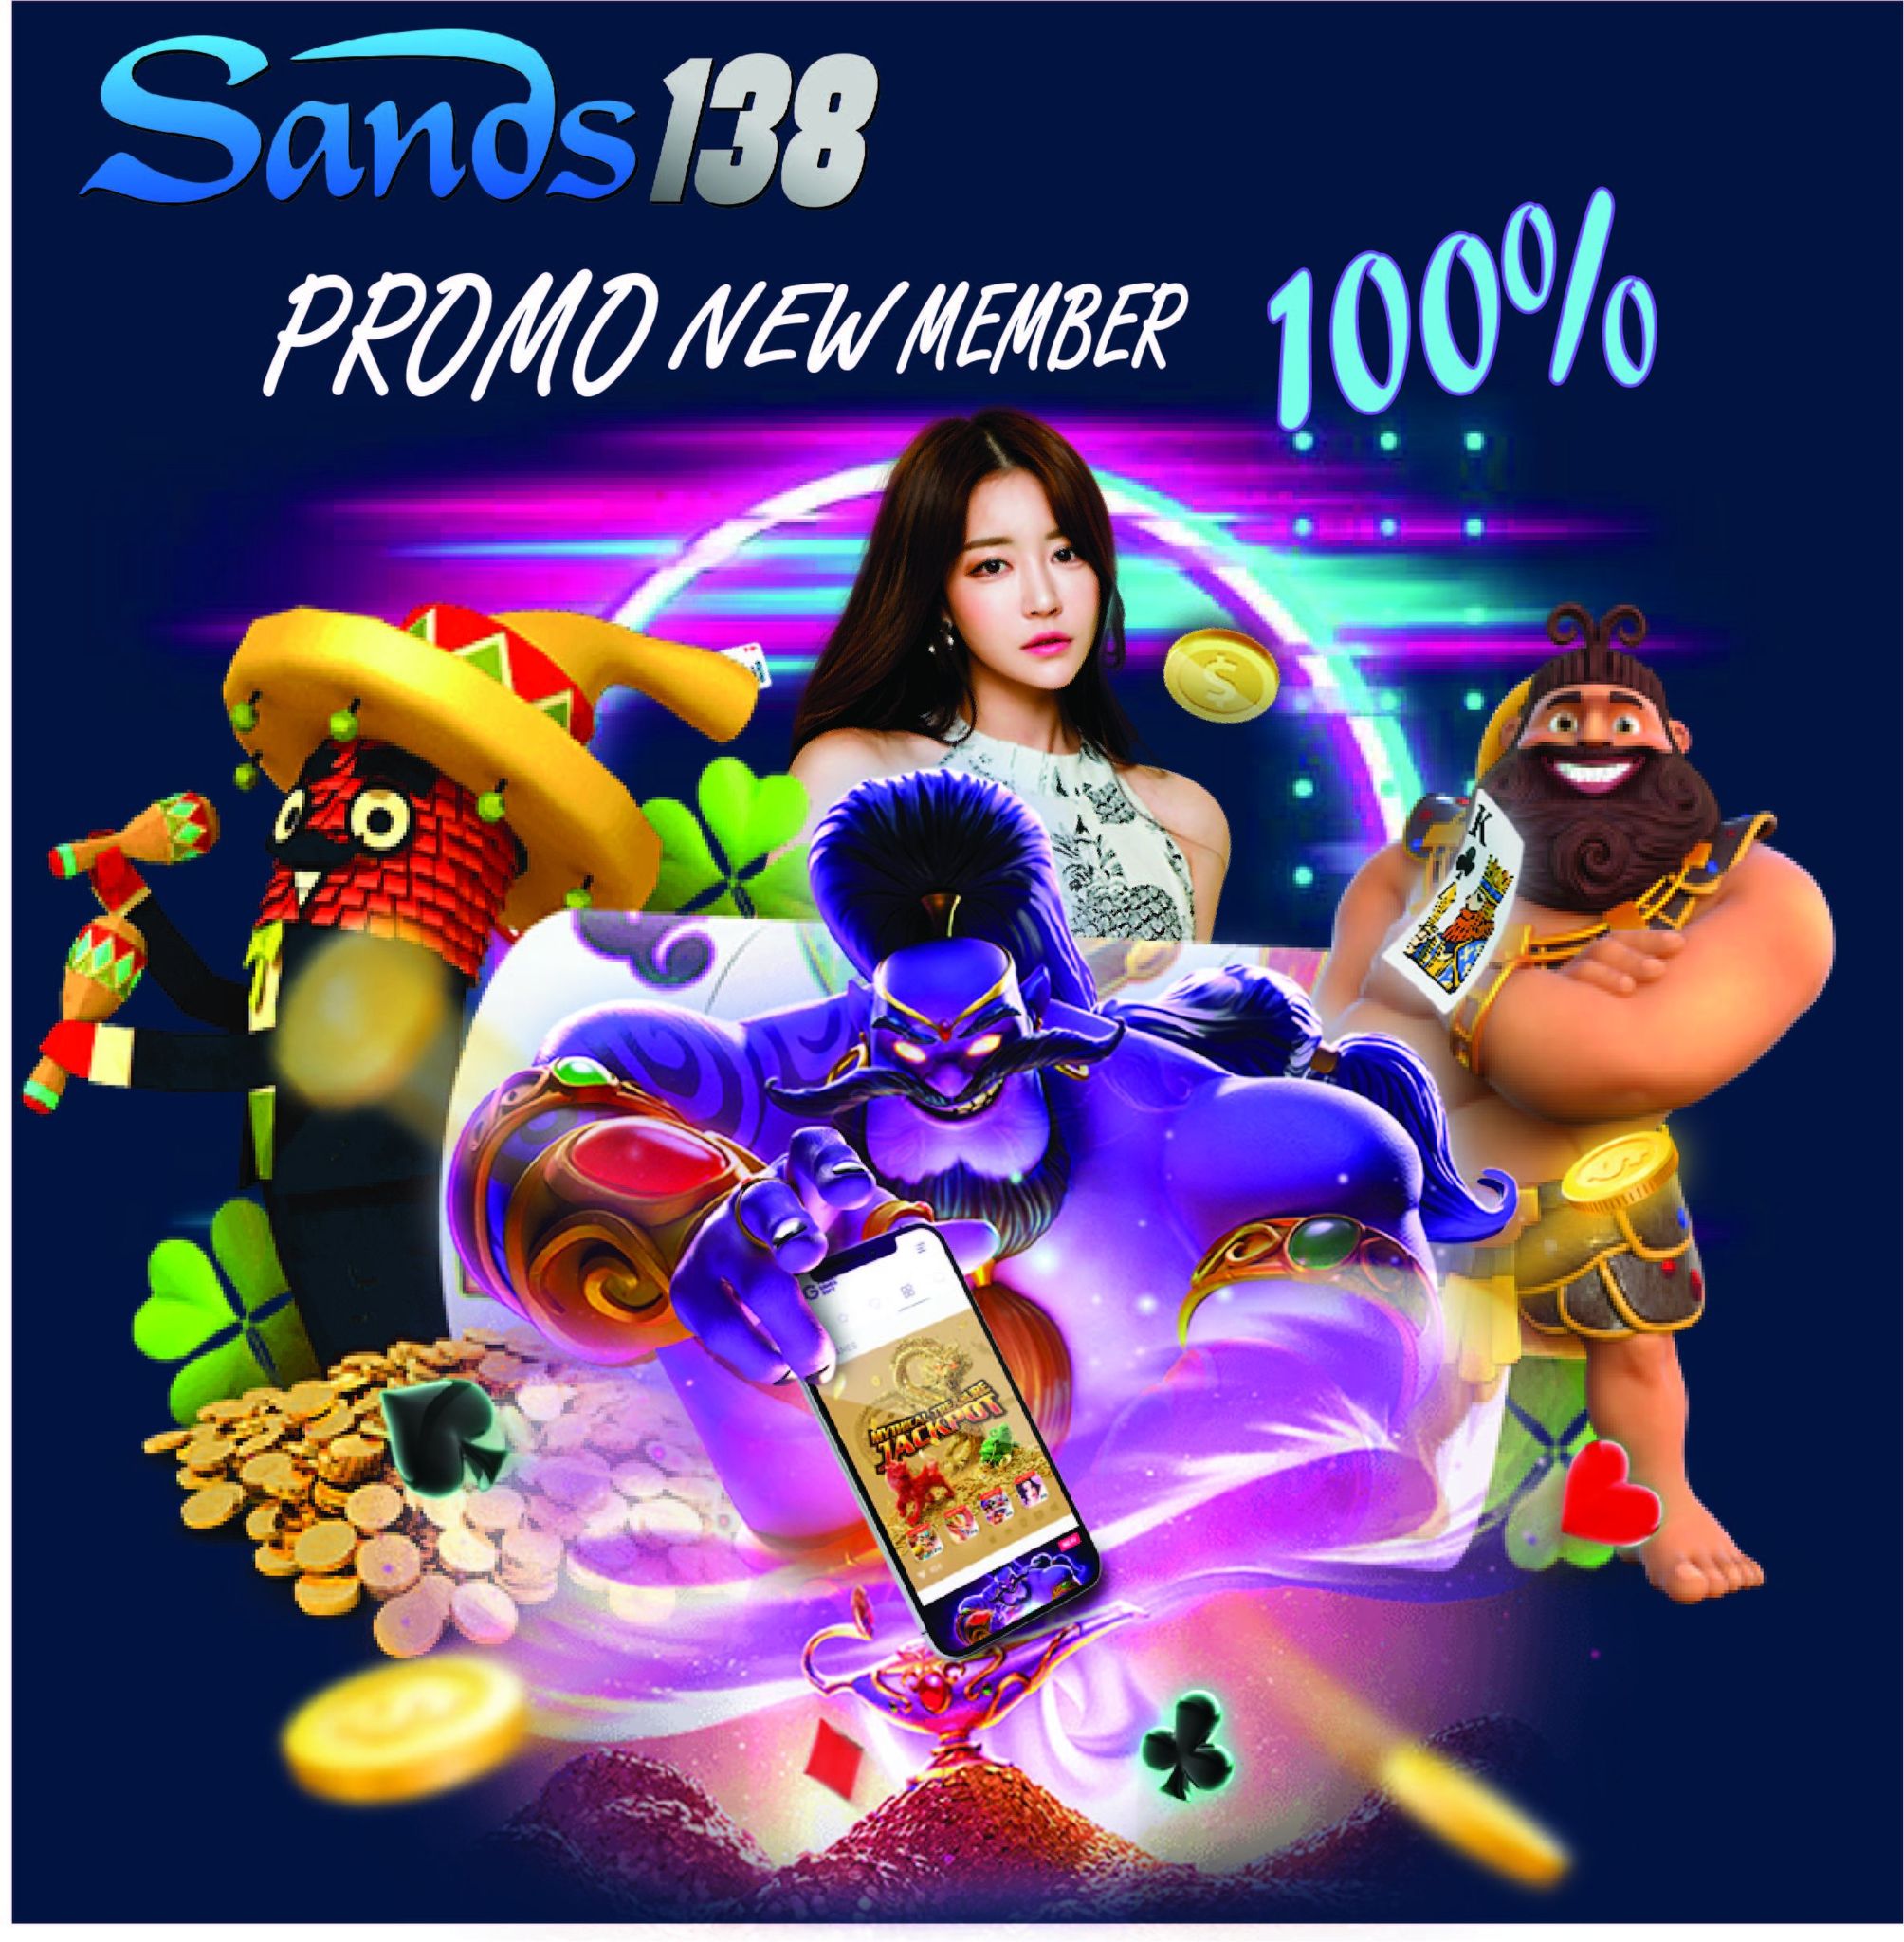 SANDS138